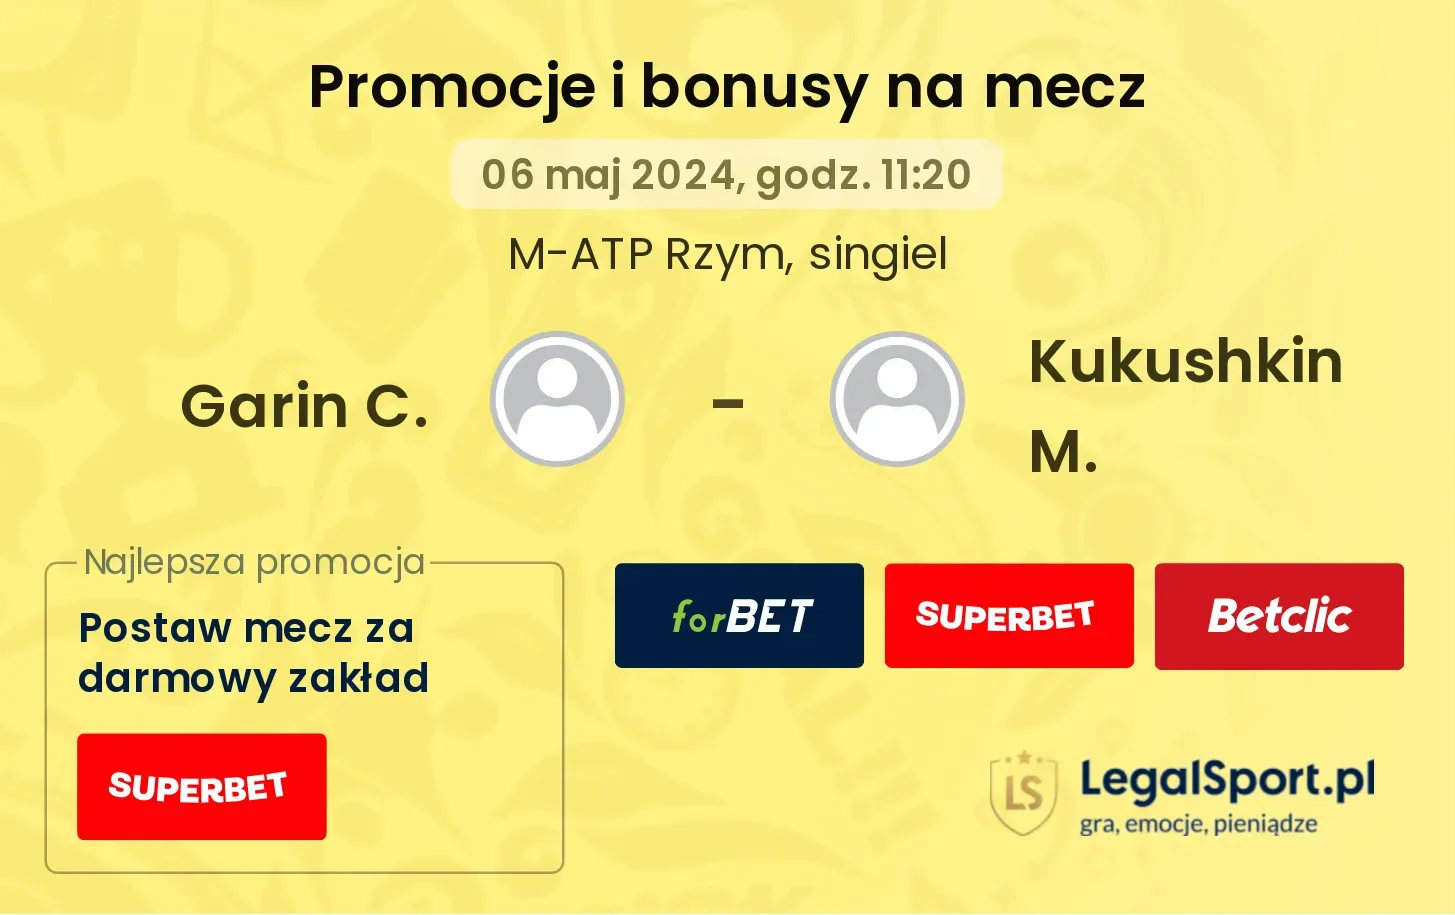 Garin C. - Kukushkin M. promocje bonusy na mecz